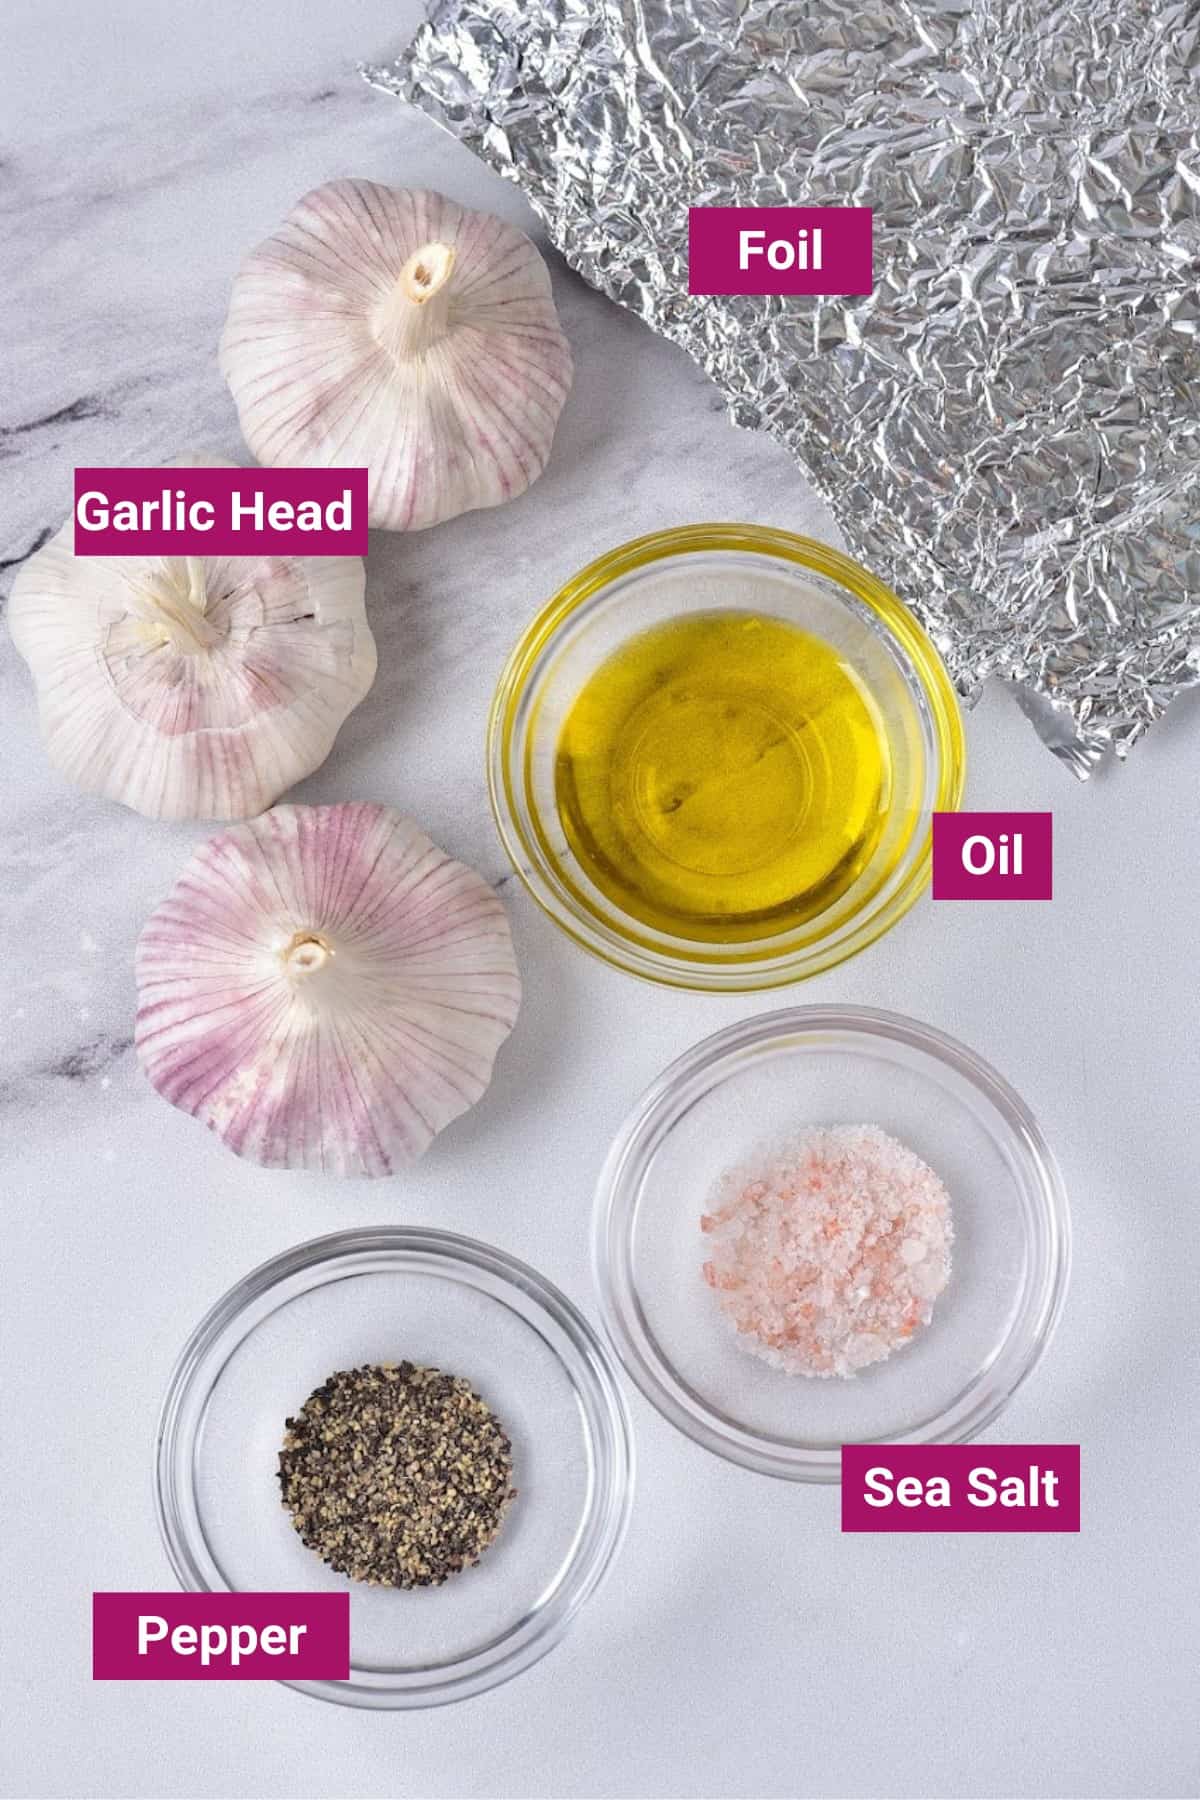 whole garlic heads, tin foil, olive oil, sea salt, and pepper